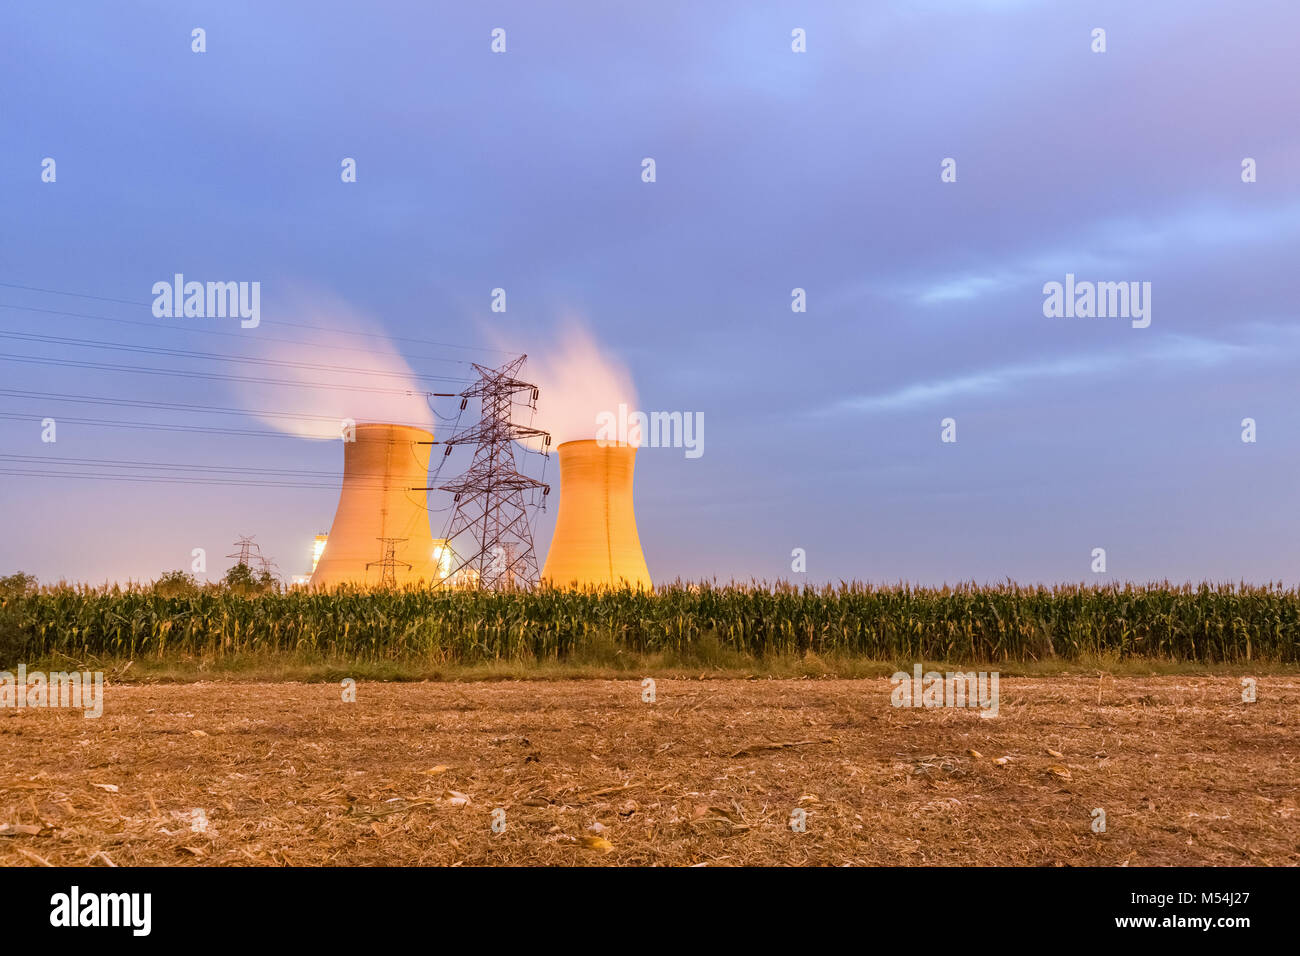 power plant on farmland at night Stock Photo